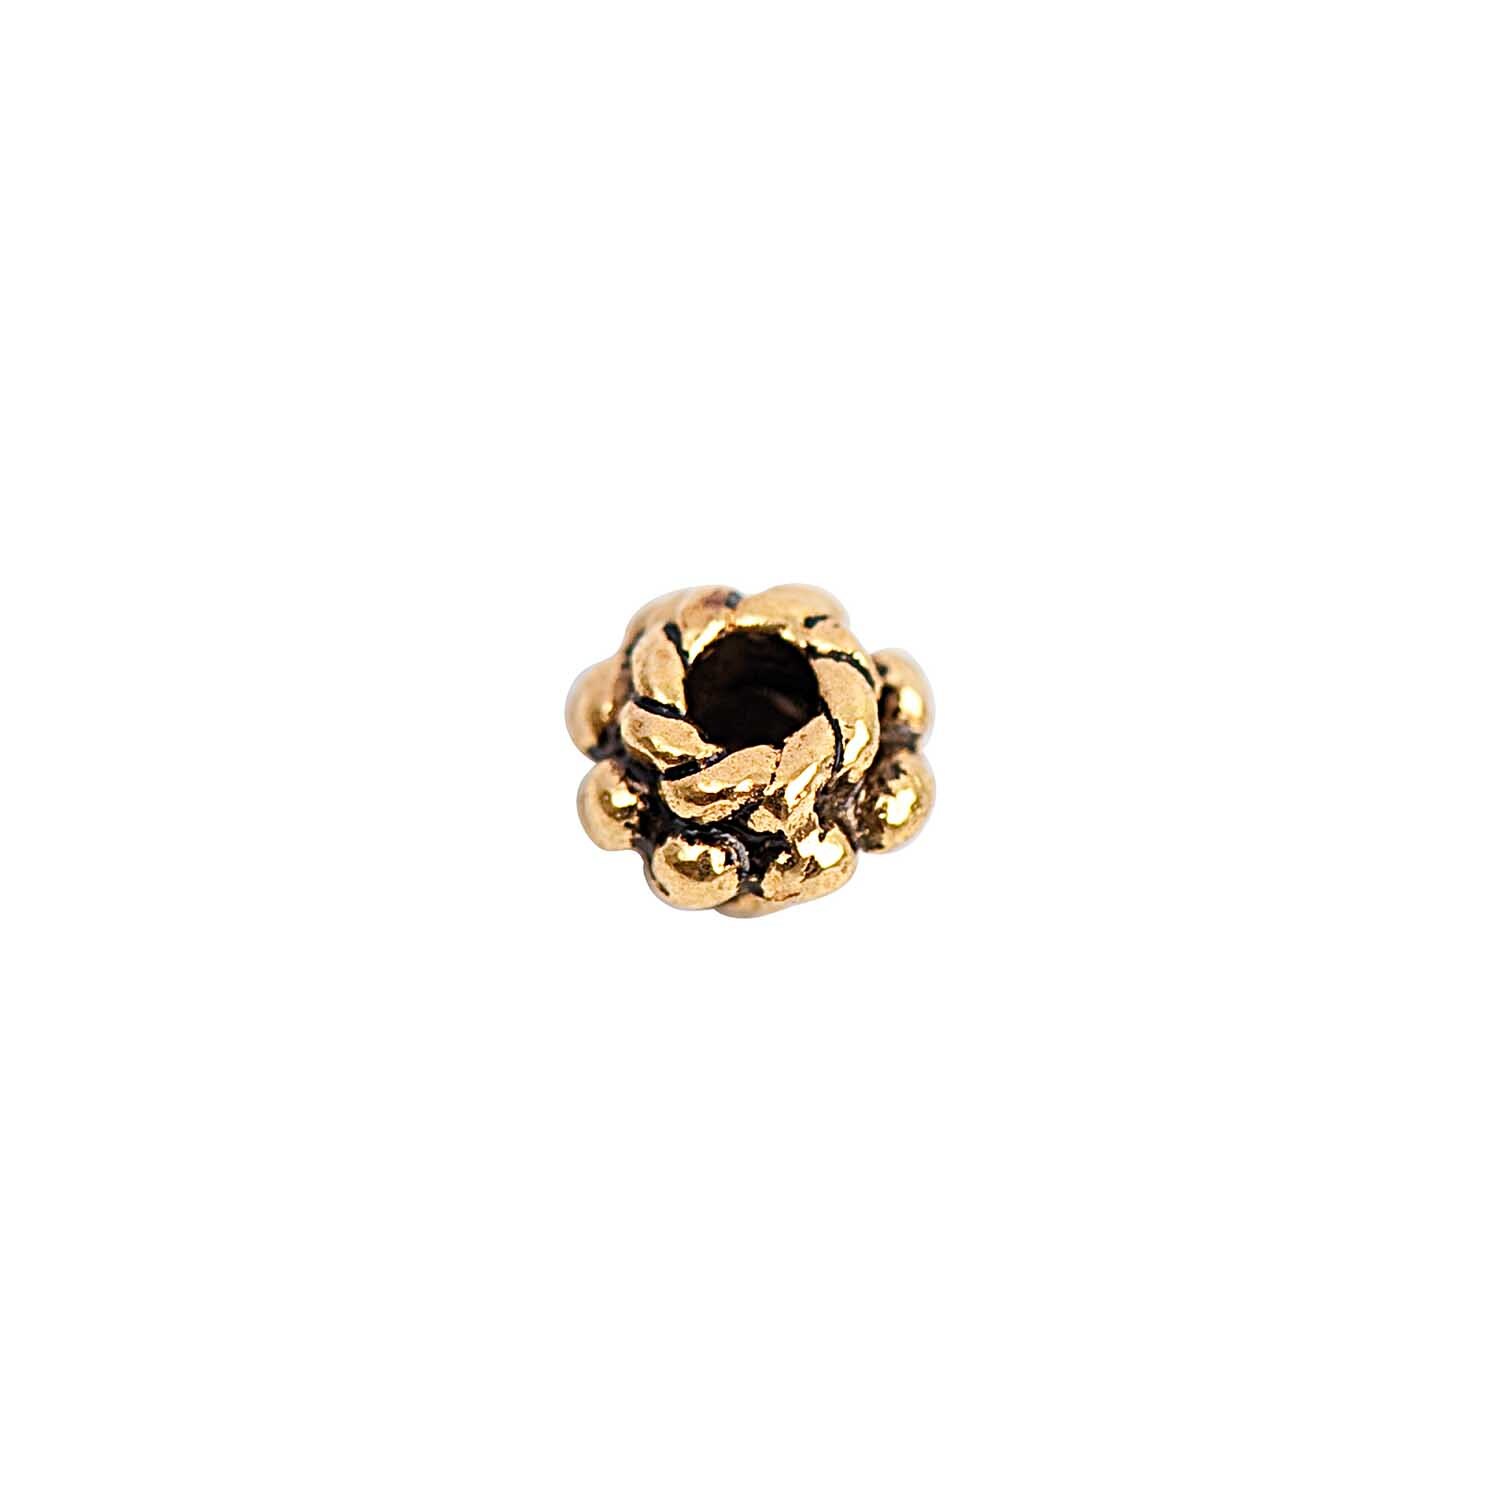 Perle flach schwarz-gold 6mm 30 Stück